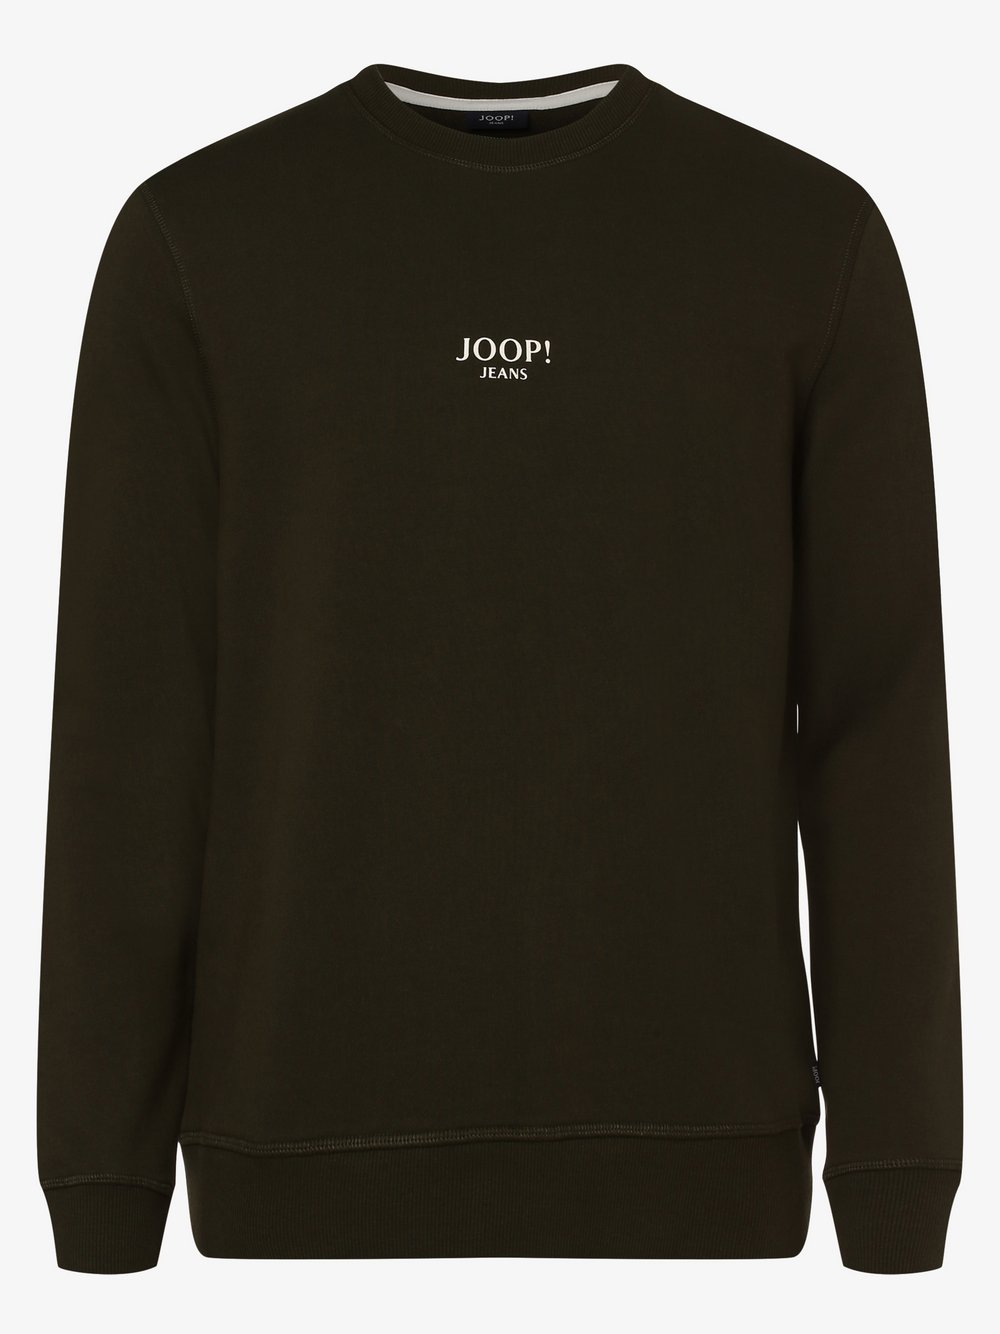 Joop Jeans - Męska bluza nierozpinana – Skipp, zielony